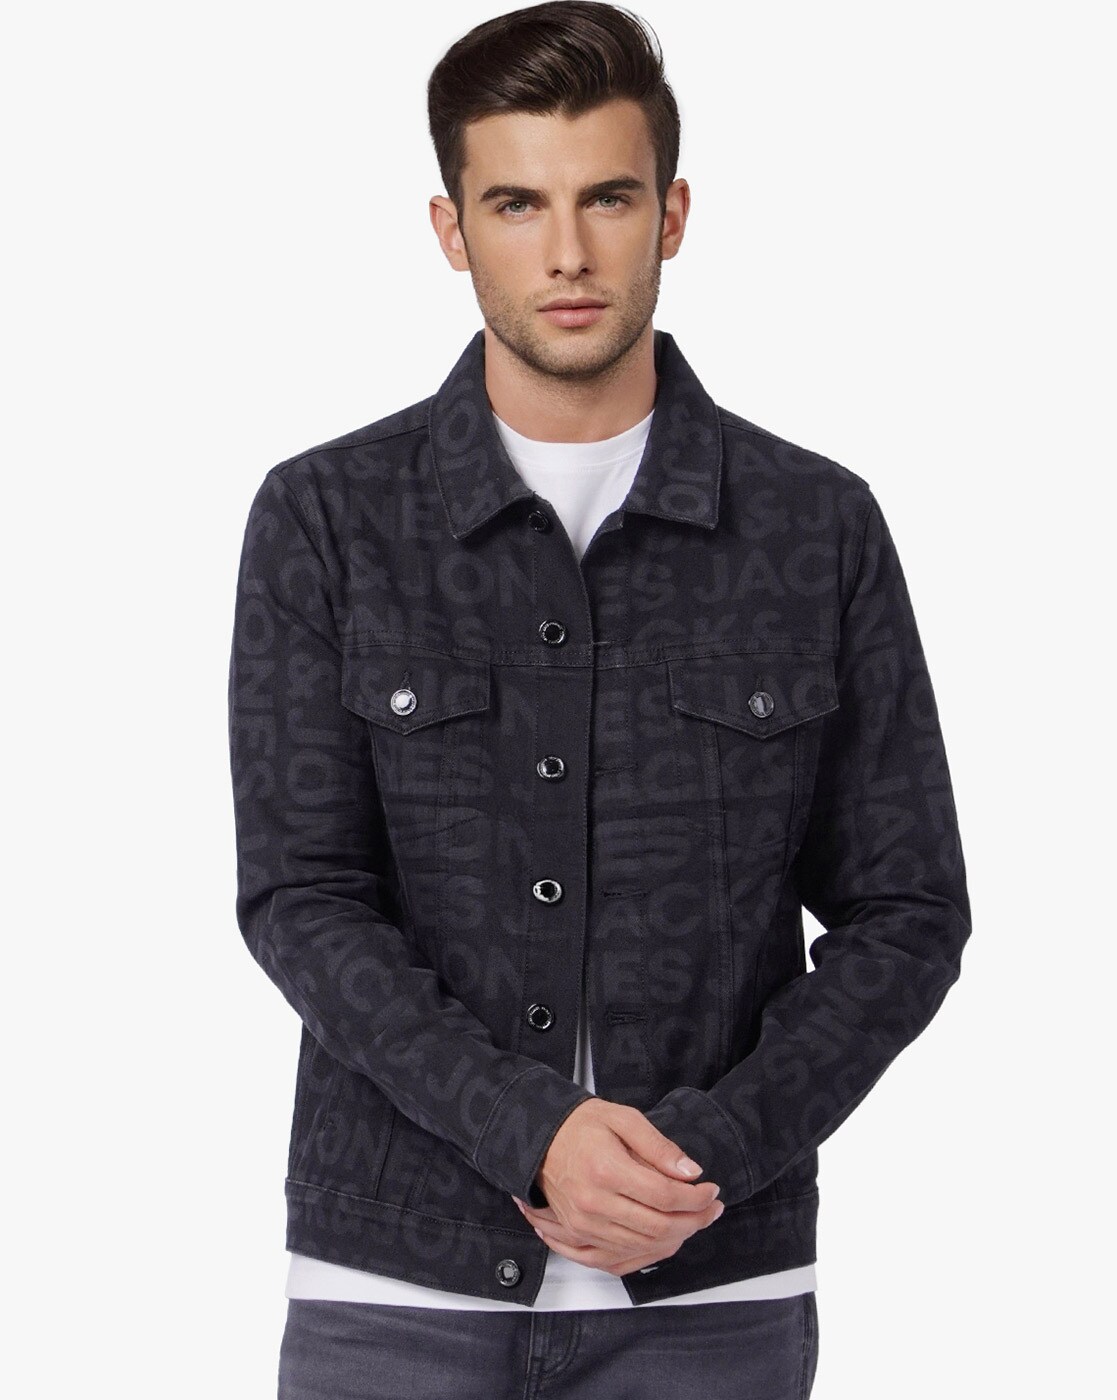 Buy Navy Blue Jackets & Coats for Men by Ketch Online | Ajio.com